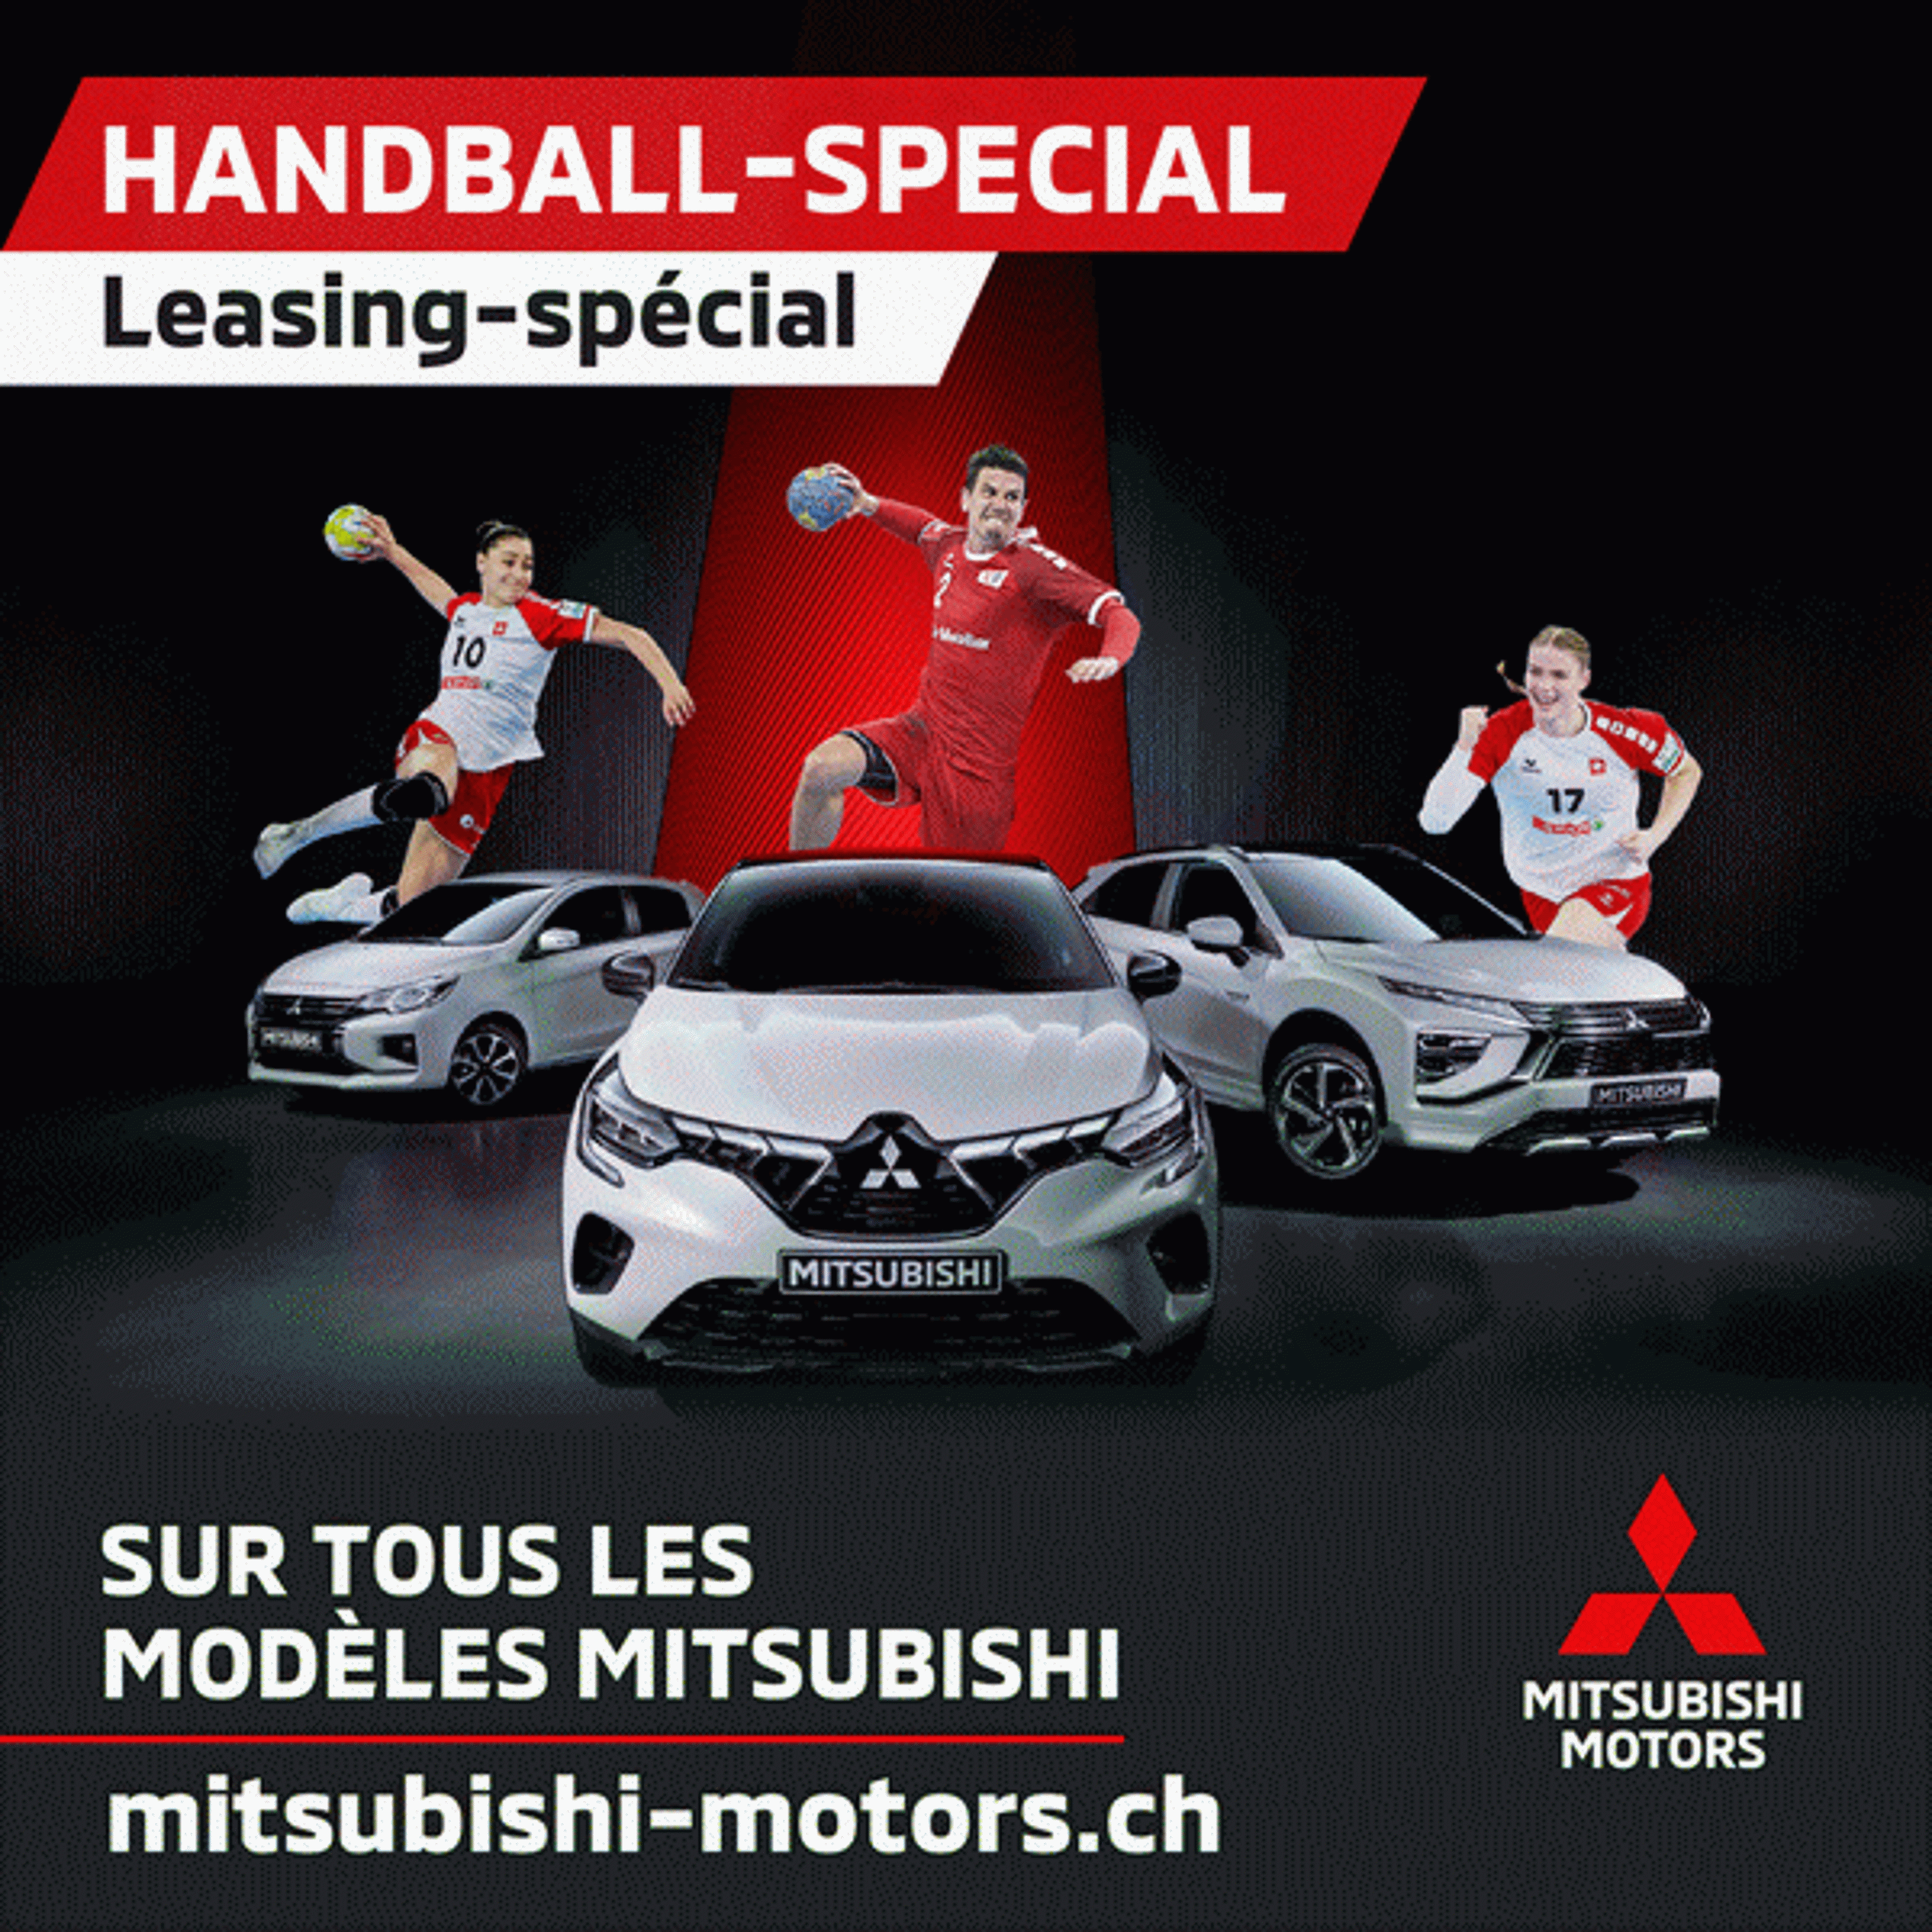 Handball Special Leasing spécial